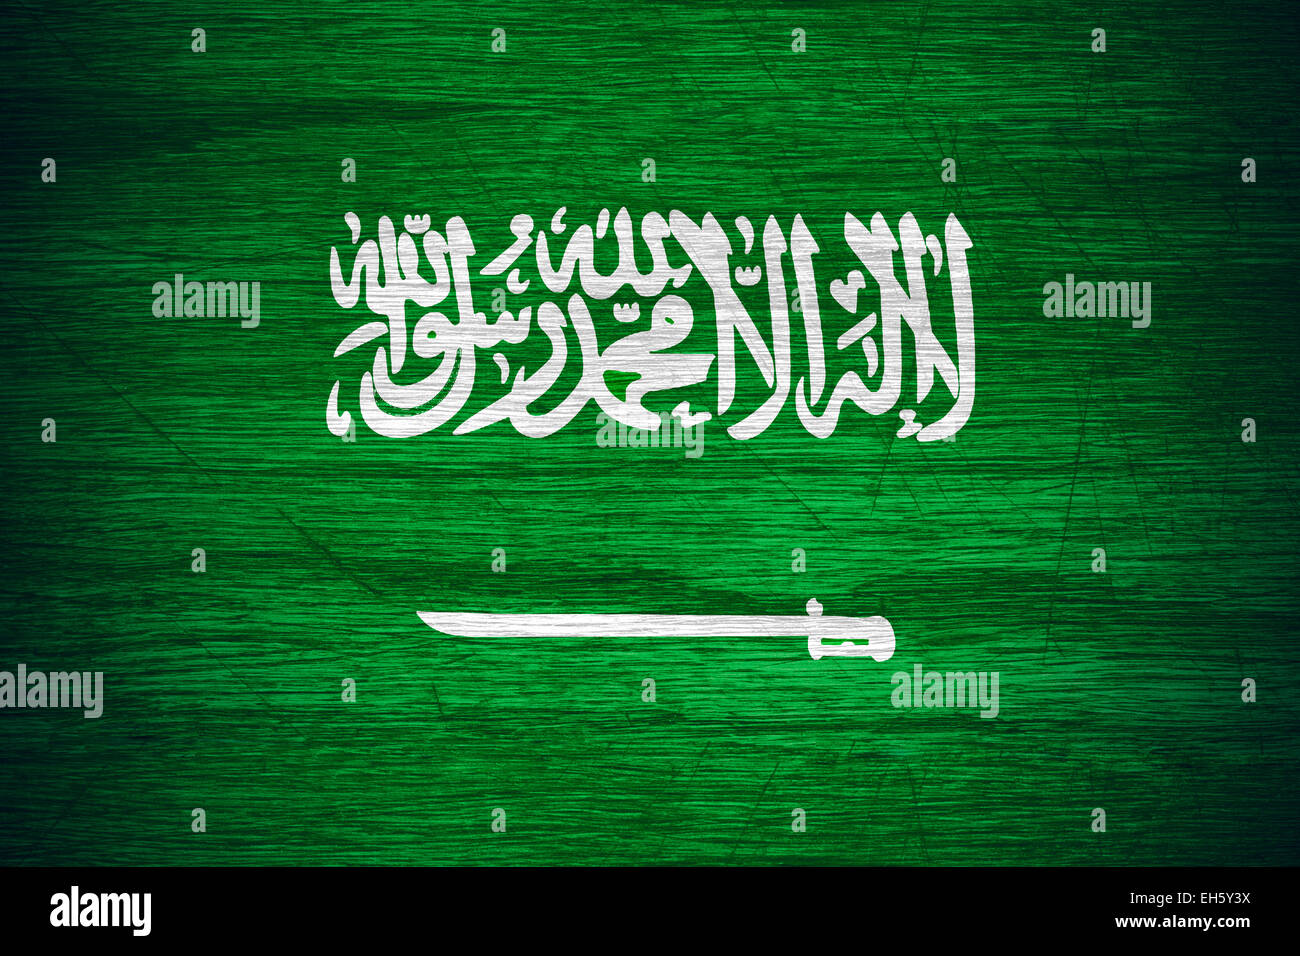 Saudi Arabia flag or banner on wooden texture Stock Photo